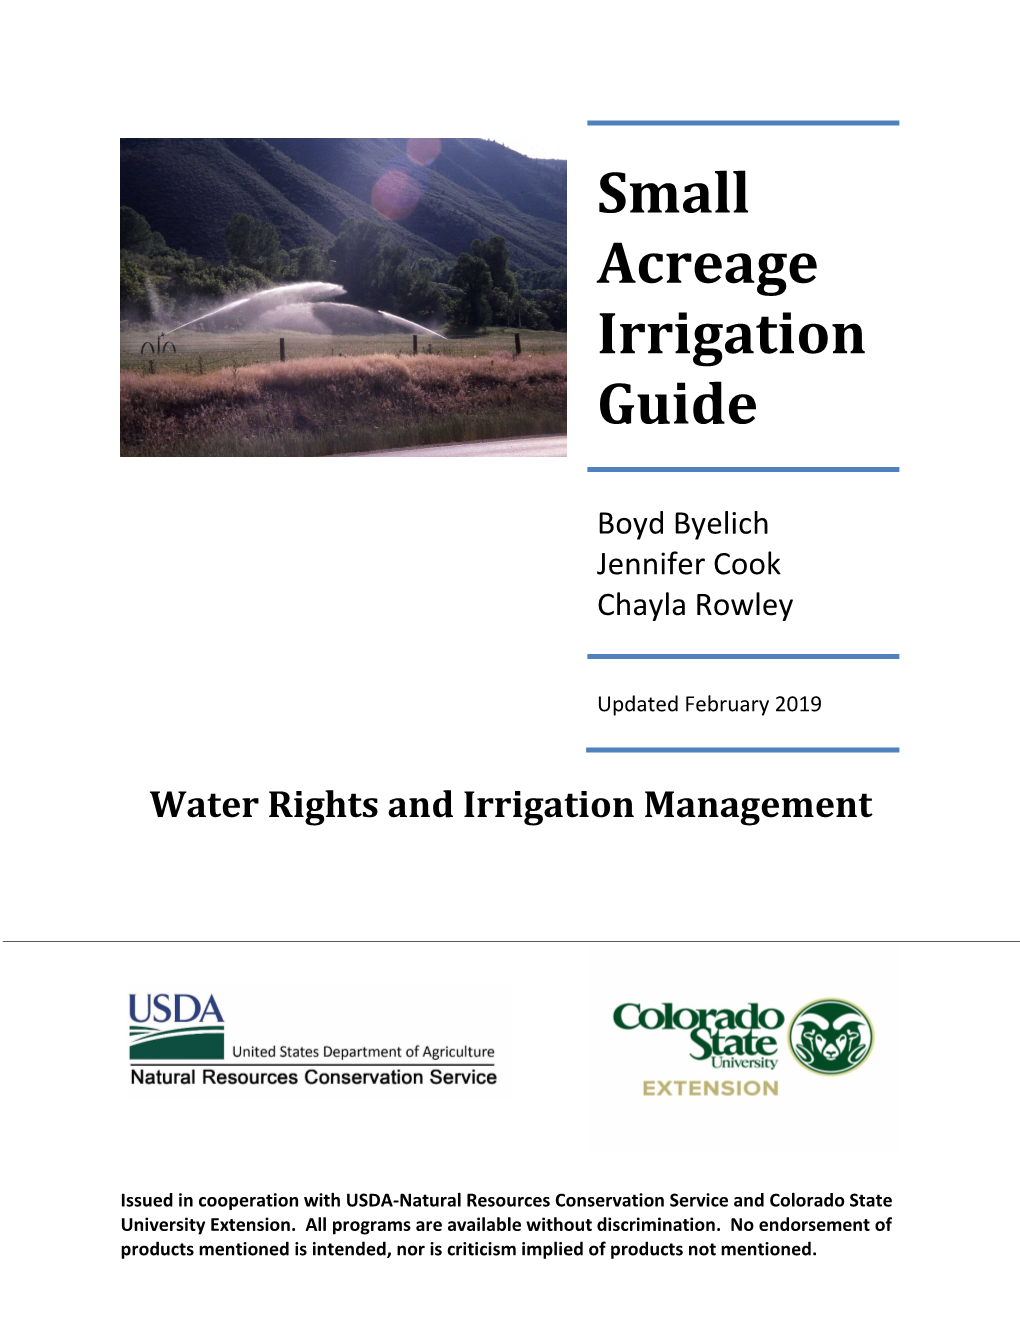 Small Acreage Irrigation Guide